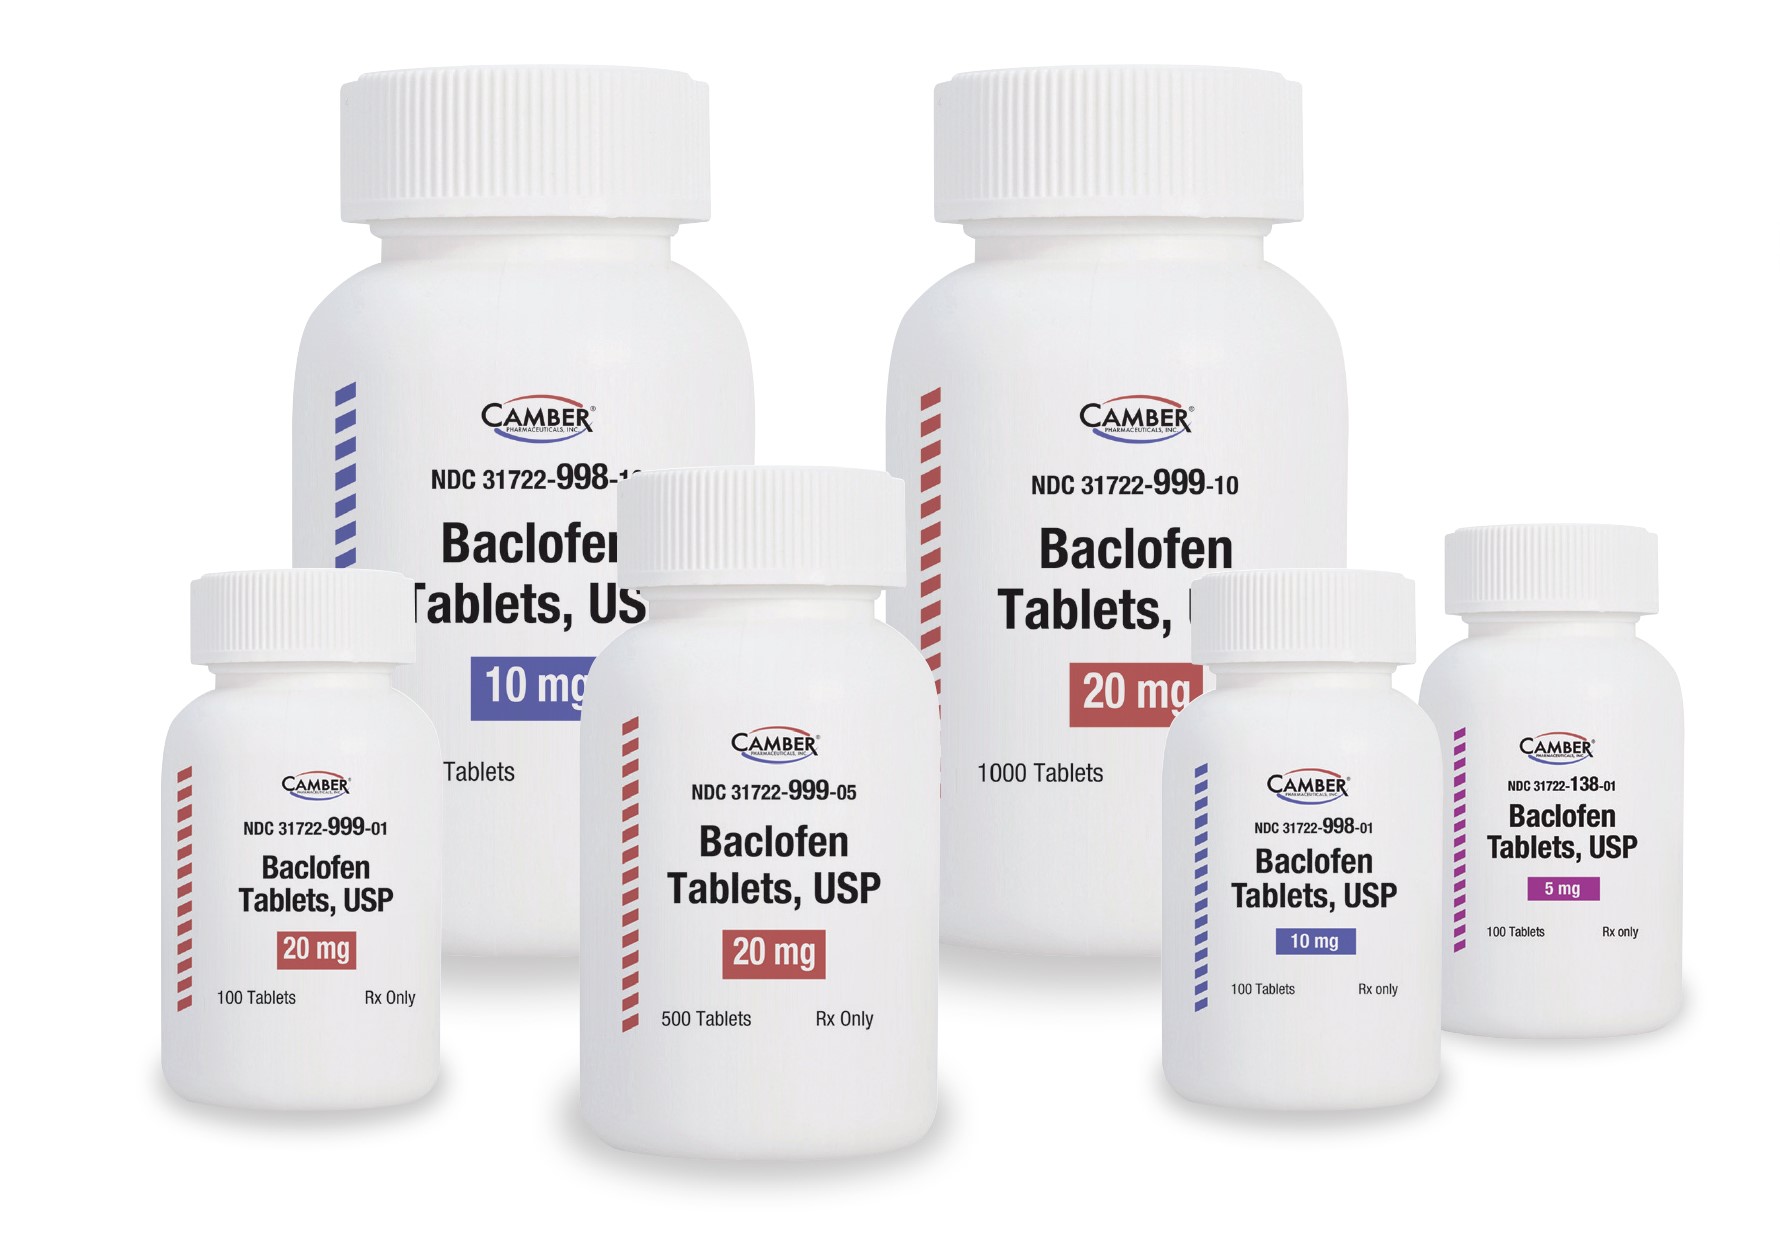 Camber adds 5 mg strength to their Baclofen portfolio – Camber .